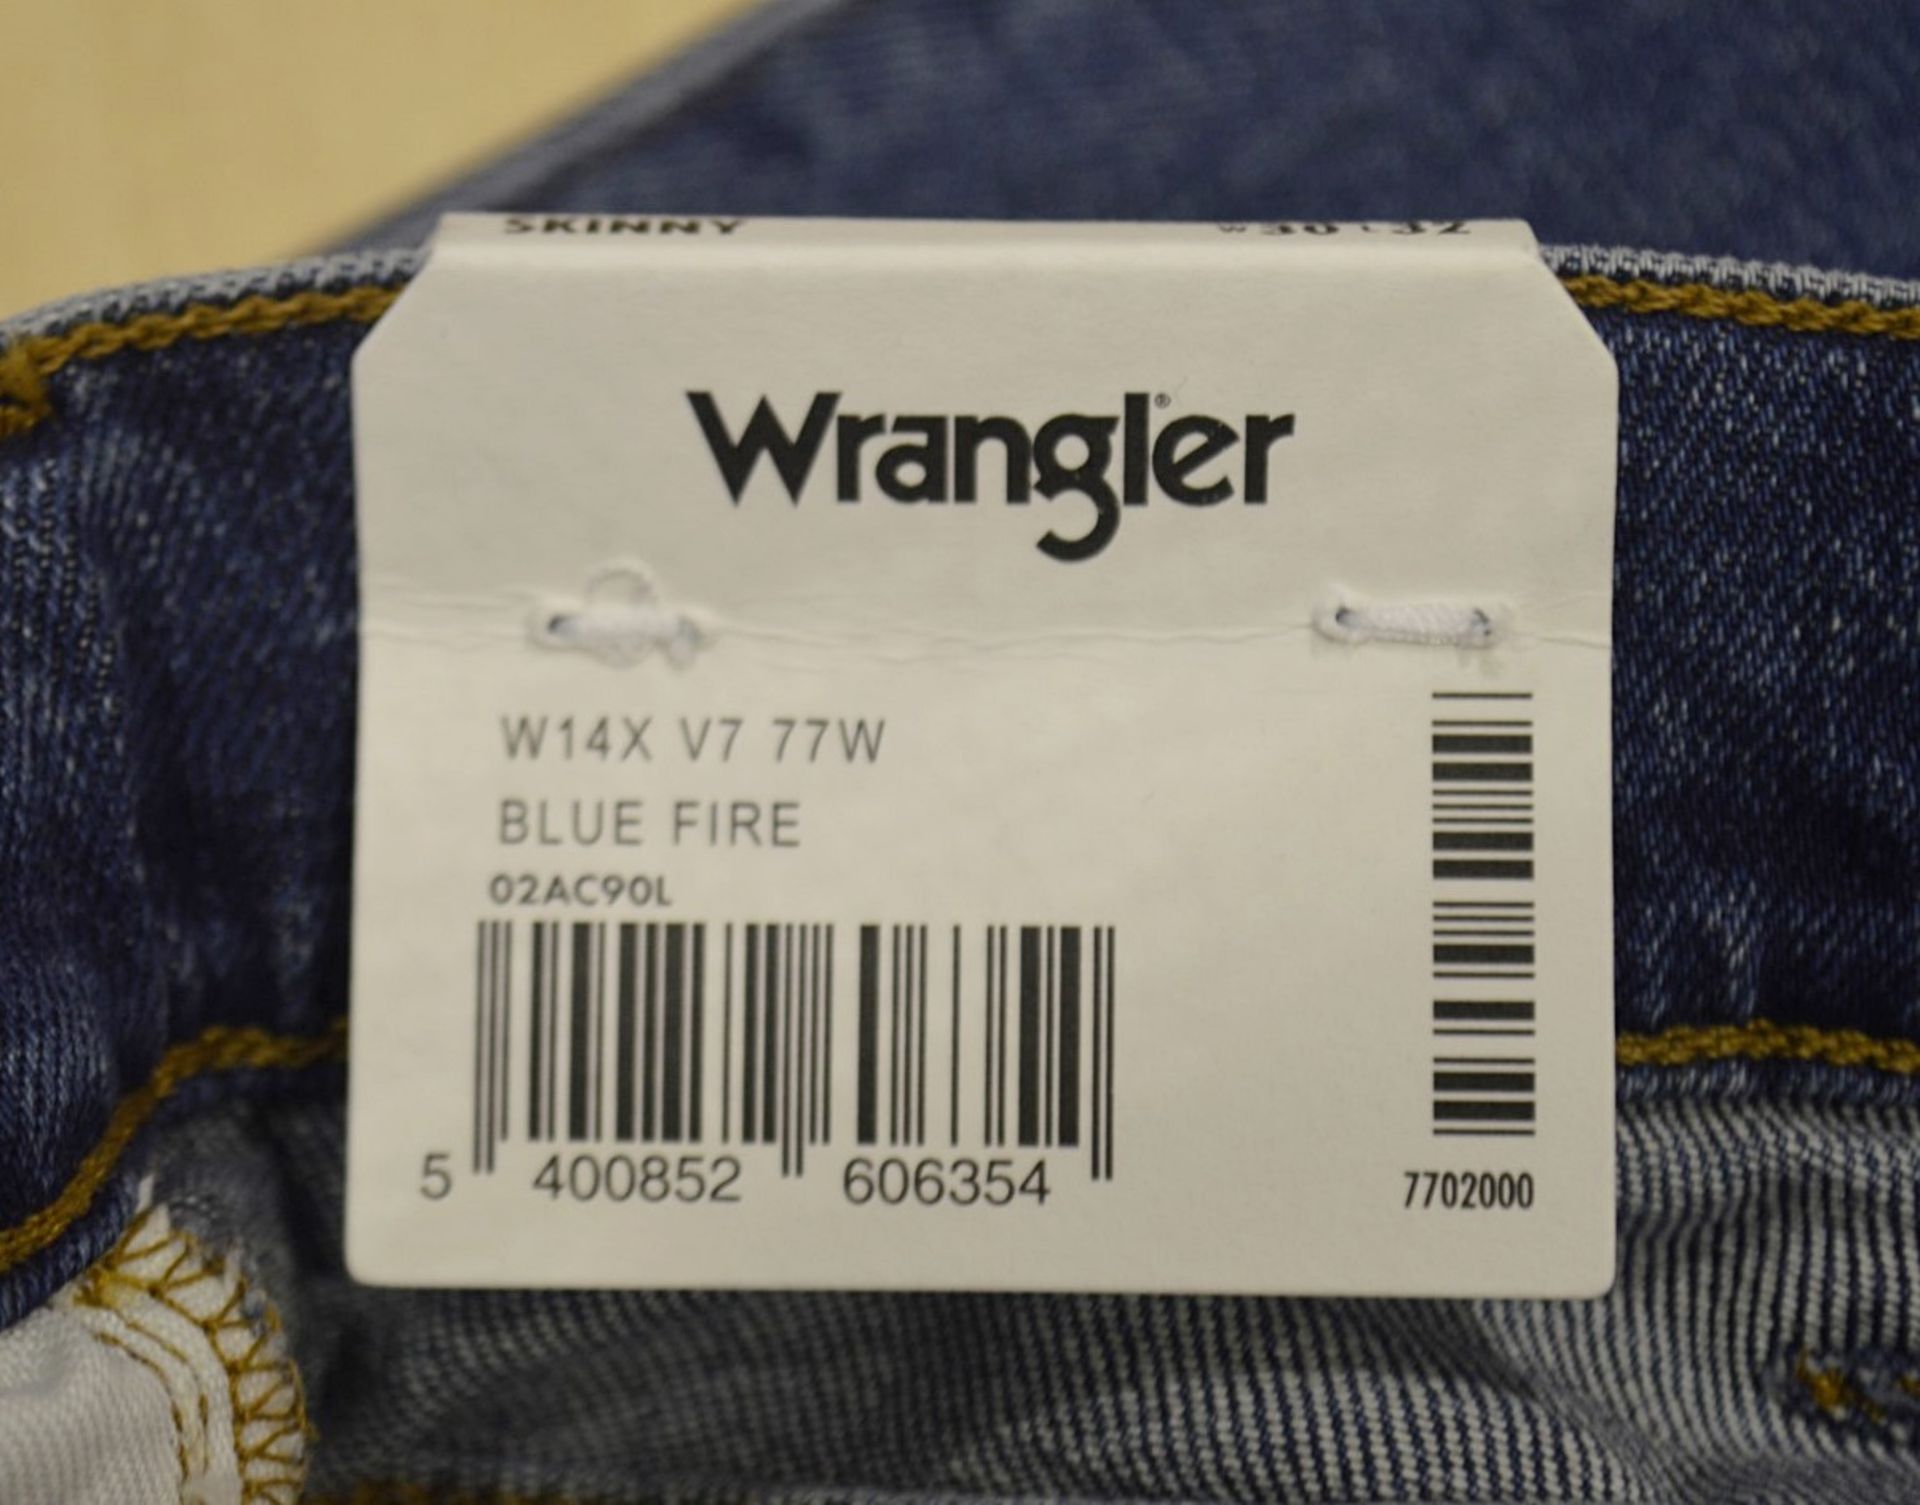 1 x Pair Of Men's Genuine Wrangler BRYSON Skinny Jeans In Blue - Size: UK 30/32 - Preowned, Like - Image 4 of 10